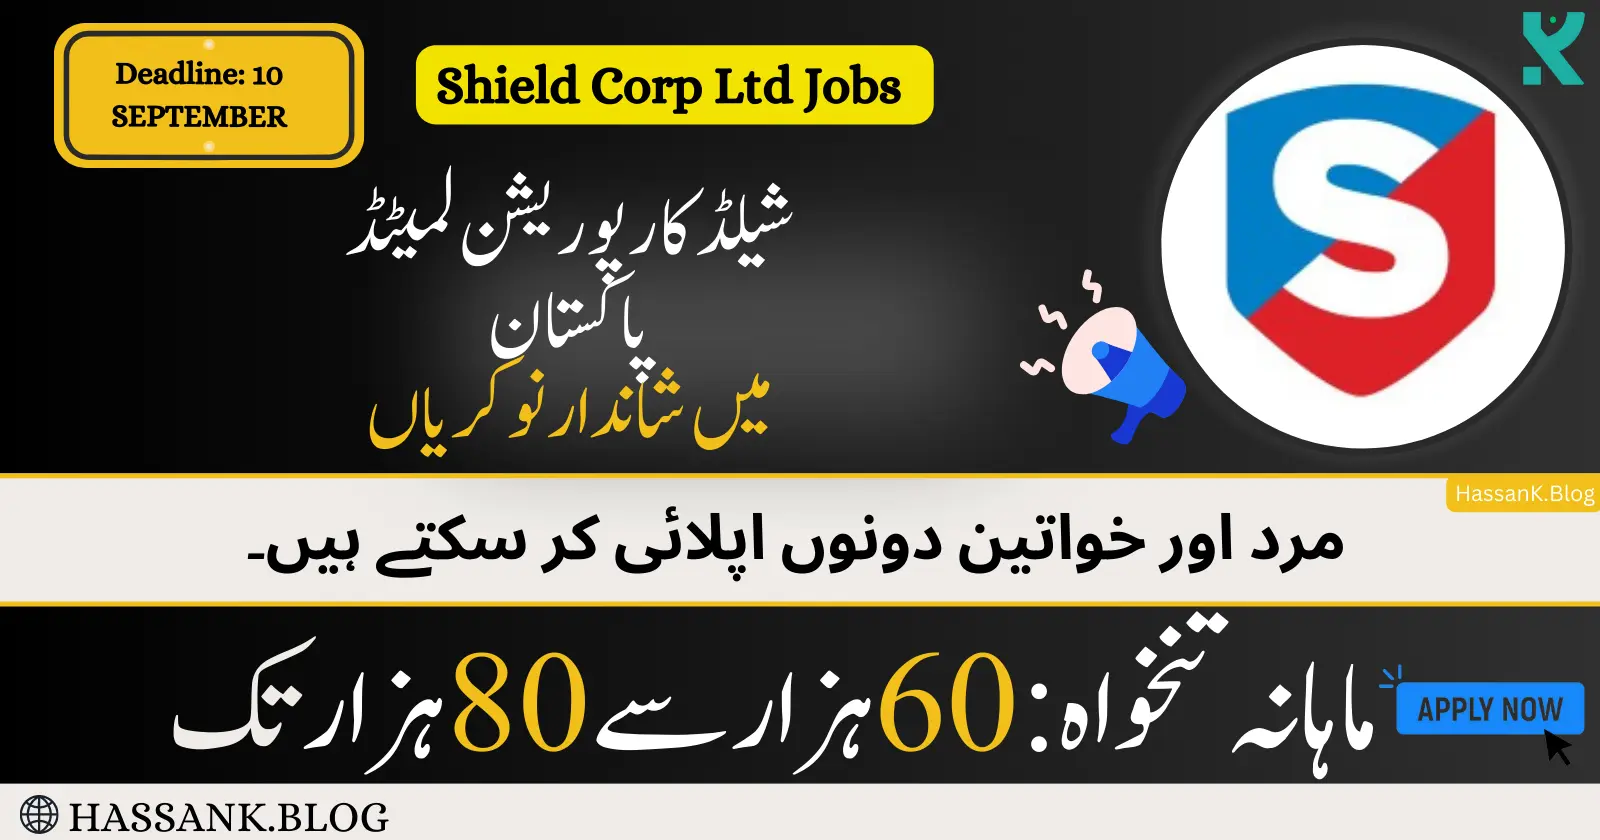 Shield Corp Ltd